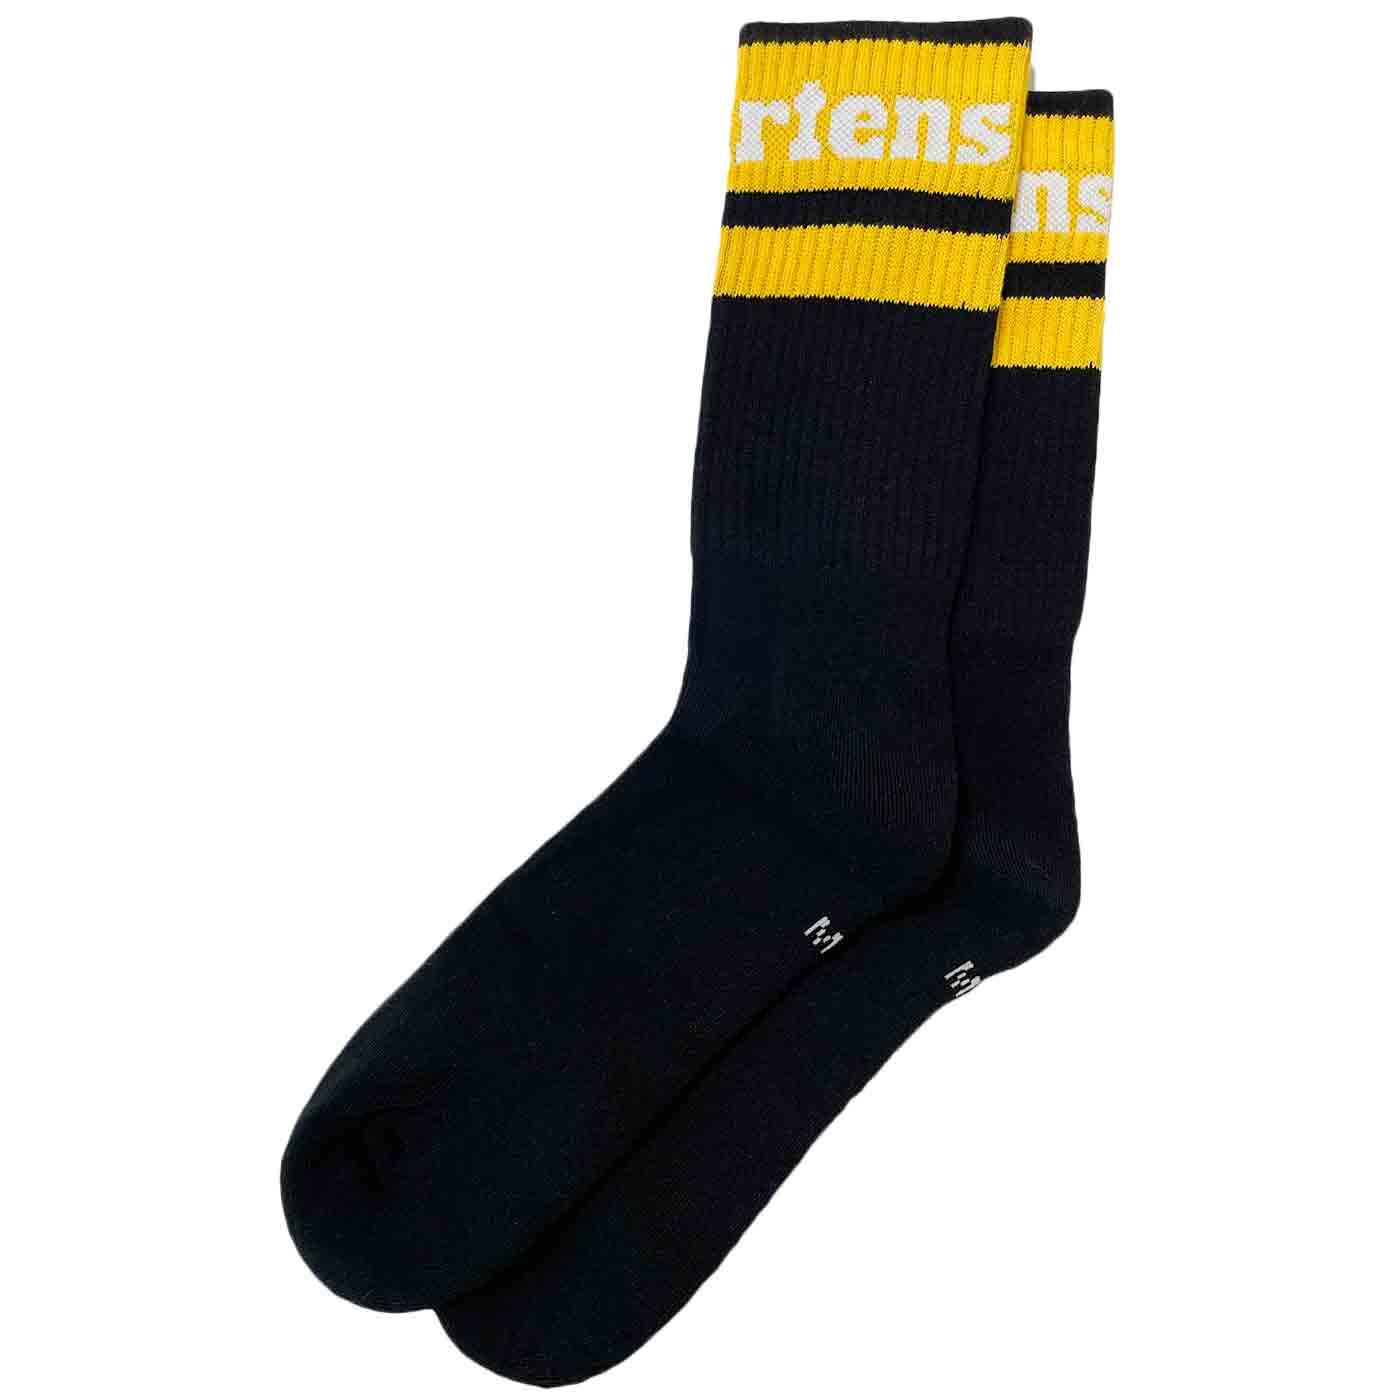 +Dr Martens Retro Athletic Logo Black/Yellow Socks